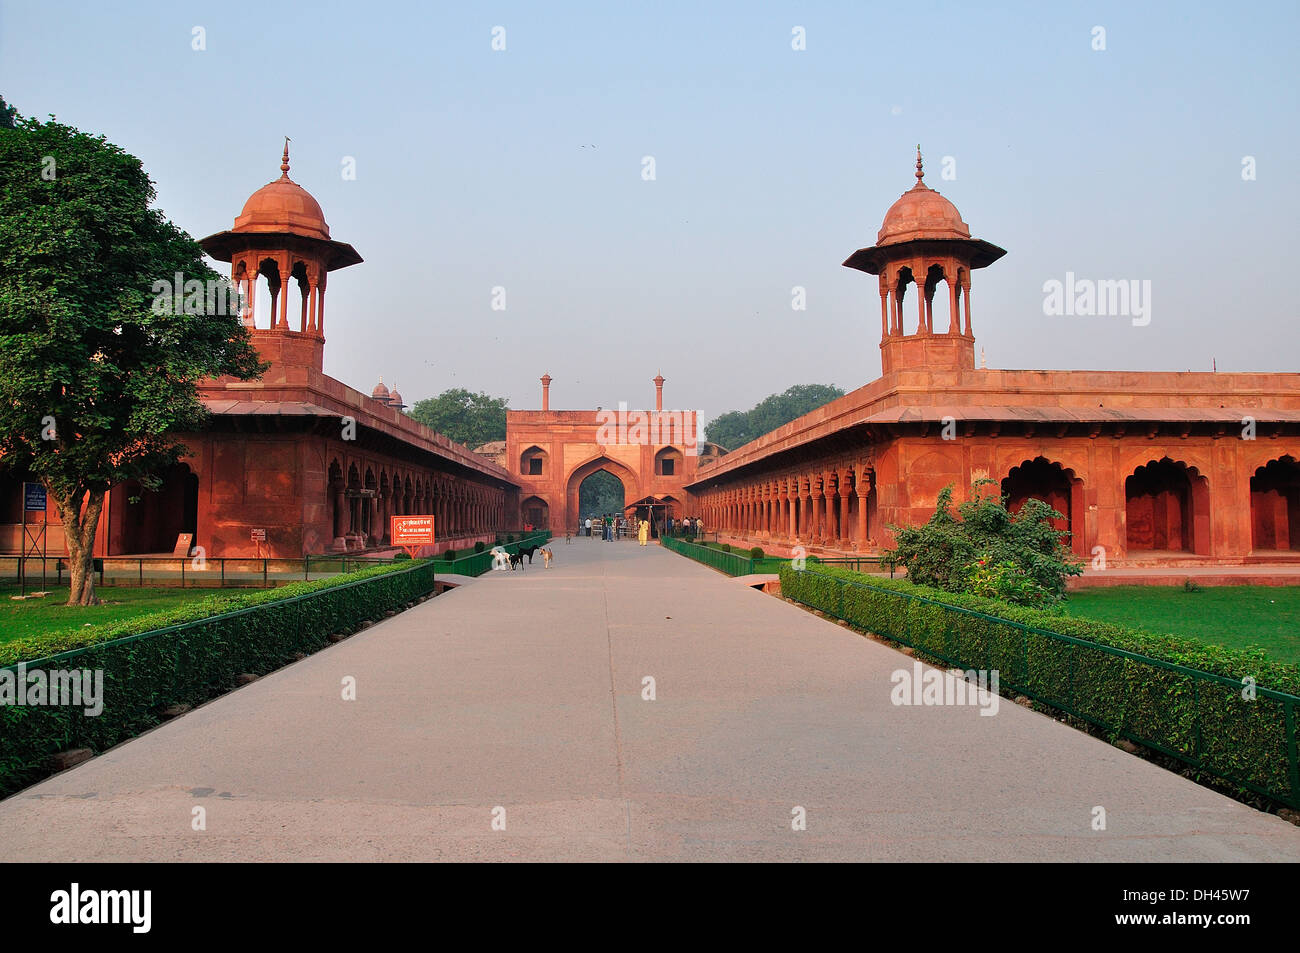 Moschee im Taj Mahal, Agra Uttar Pradesh Indien Asien Stockfoto